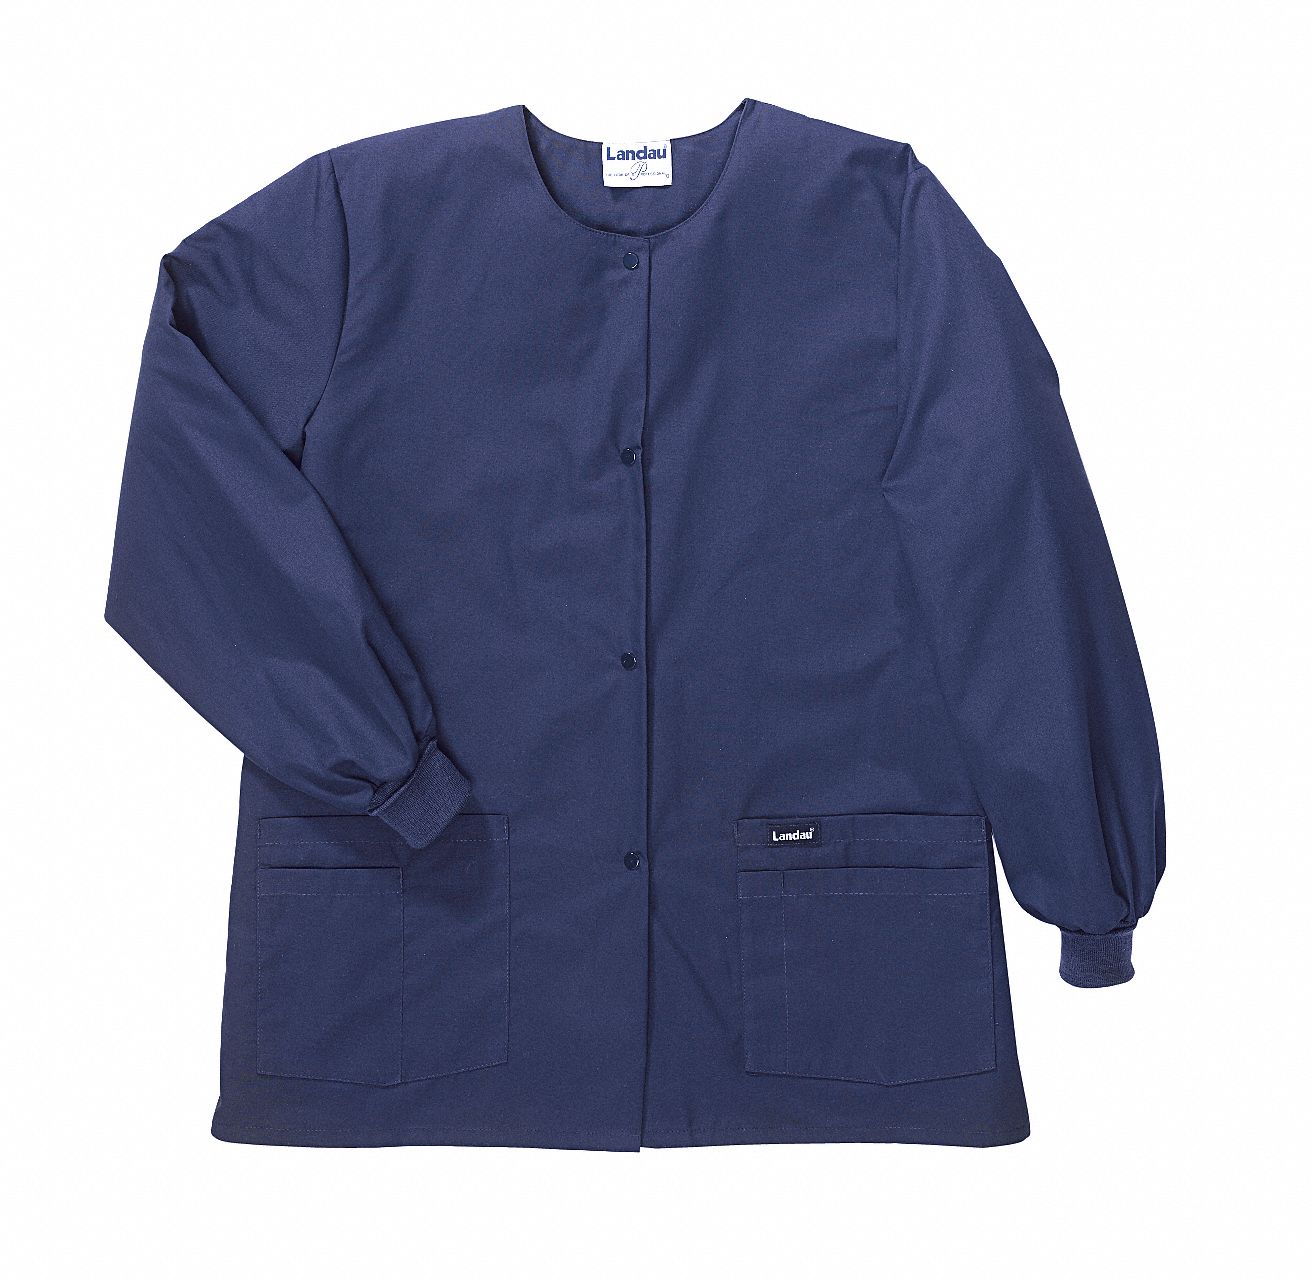 Set of 2 Small Men's Warmup Jacket Polyester/Cotton Navy New Landau